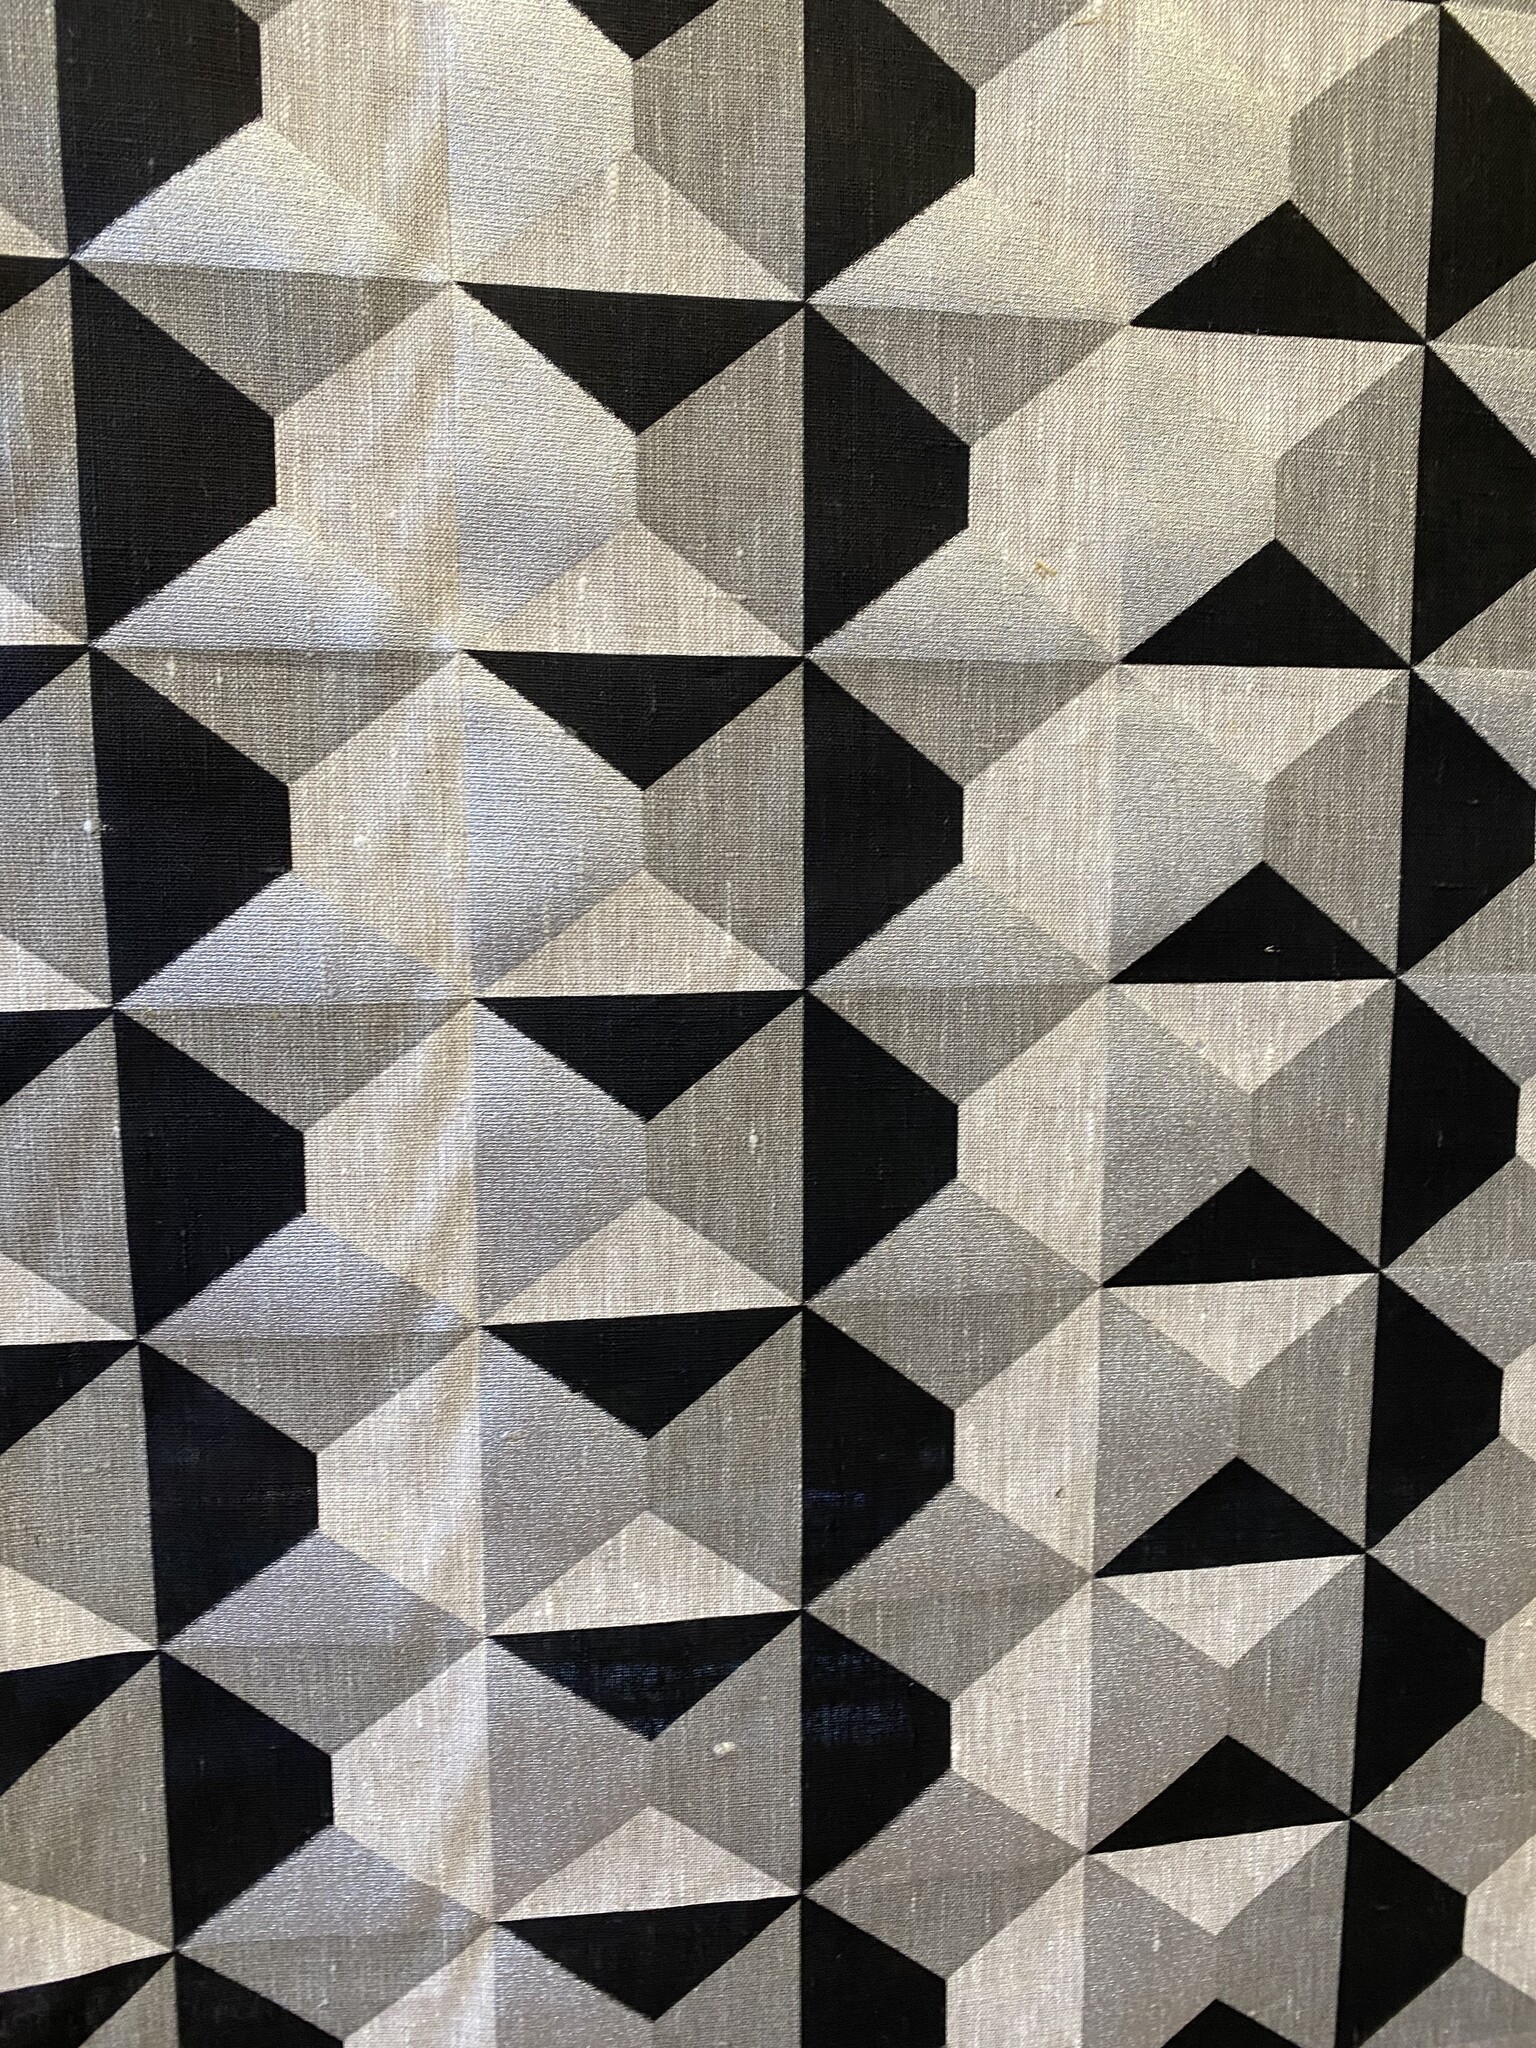 Geometric" fabric